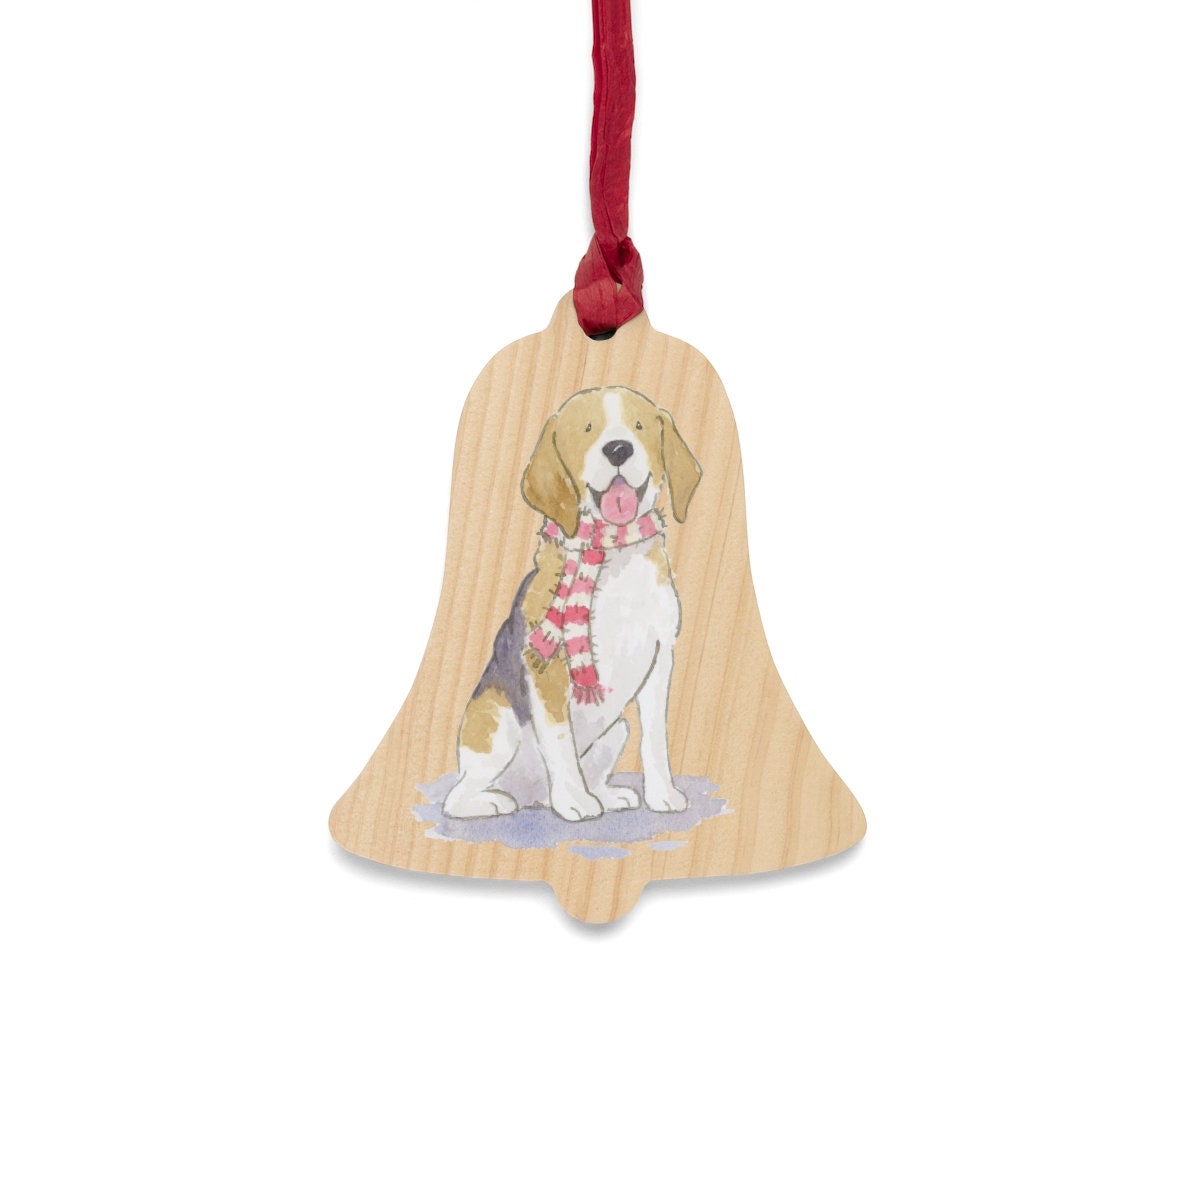 Beagle Ornament, Rustic Wood Ornament, Beagle Gift, Beagle Lover Gift, Personalized Beagle Ornament, Stocking Stuffer, Cute Dog Ornament